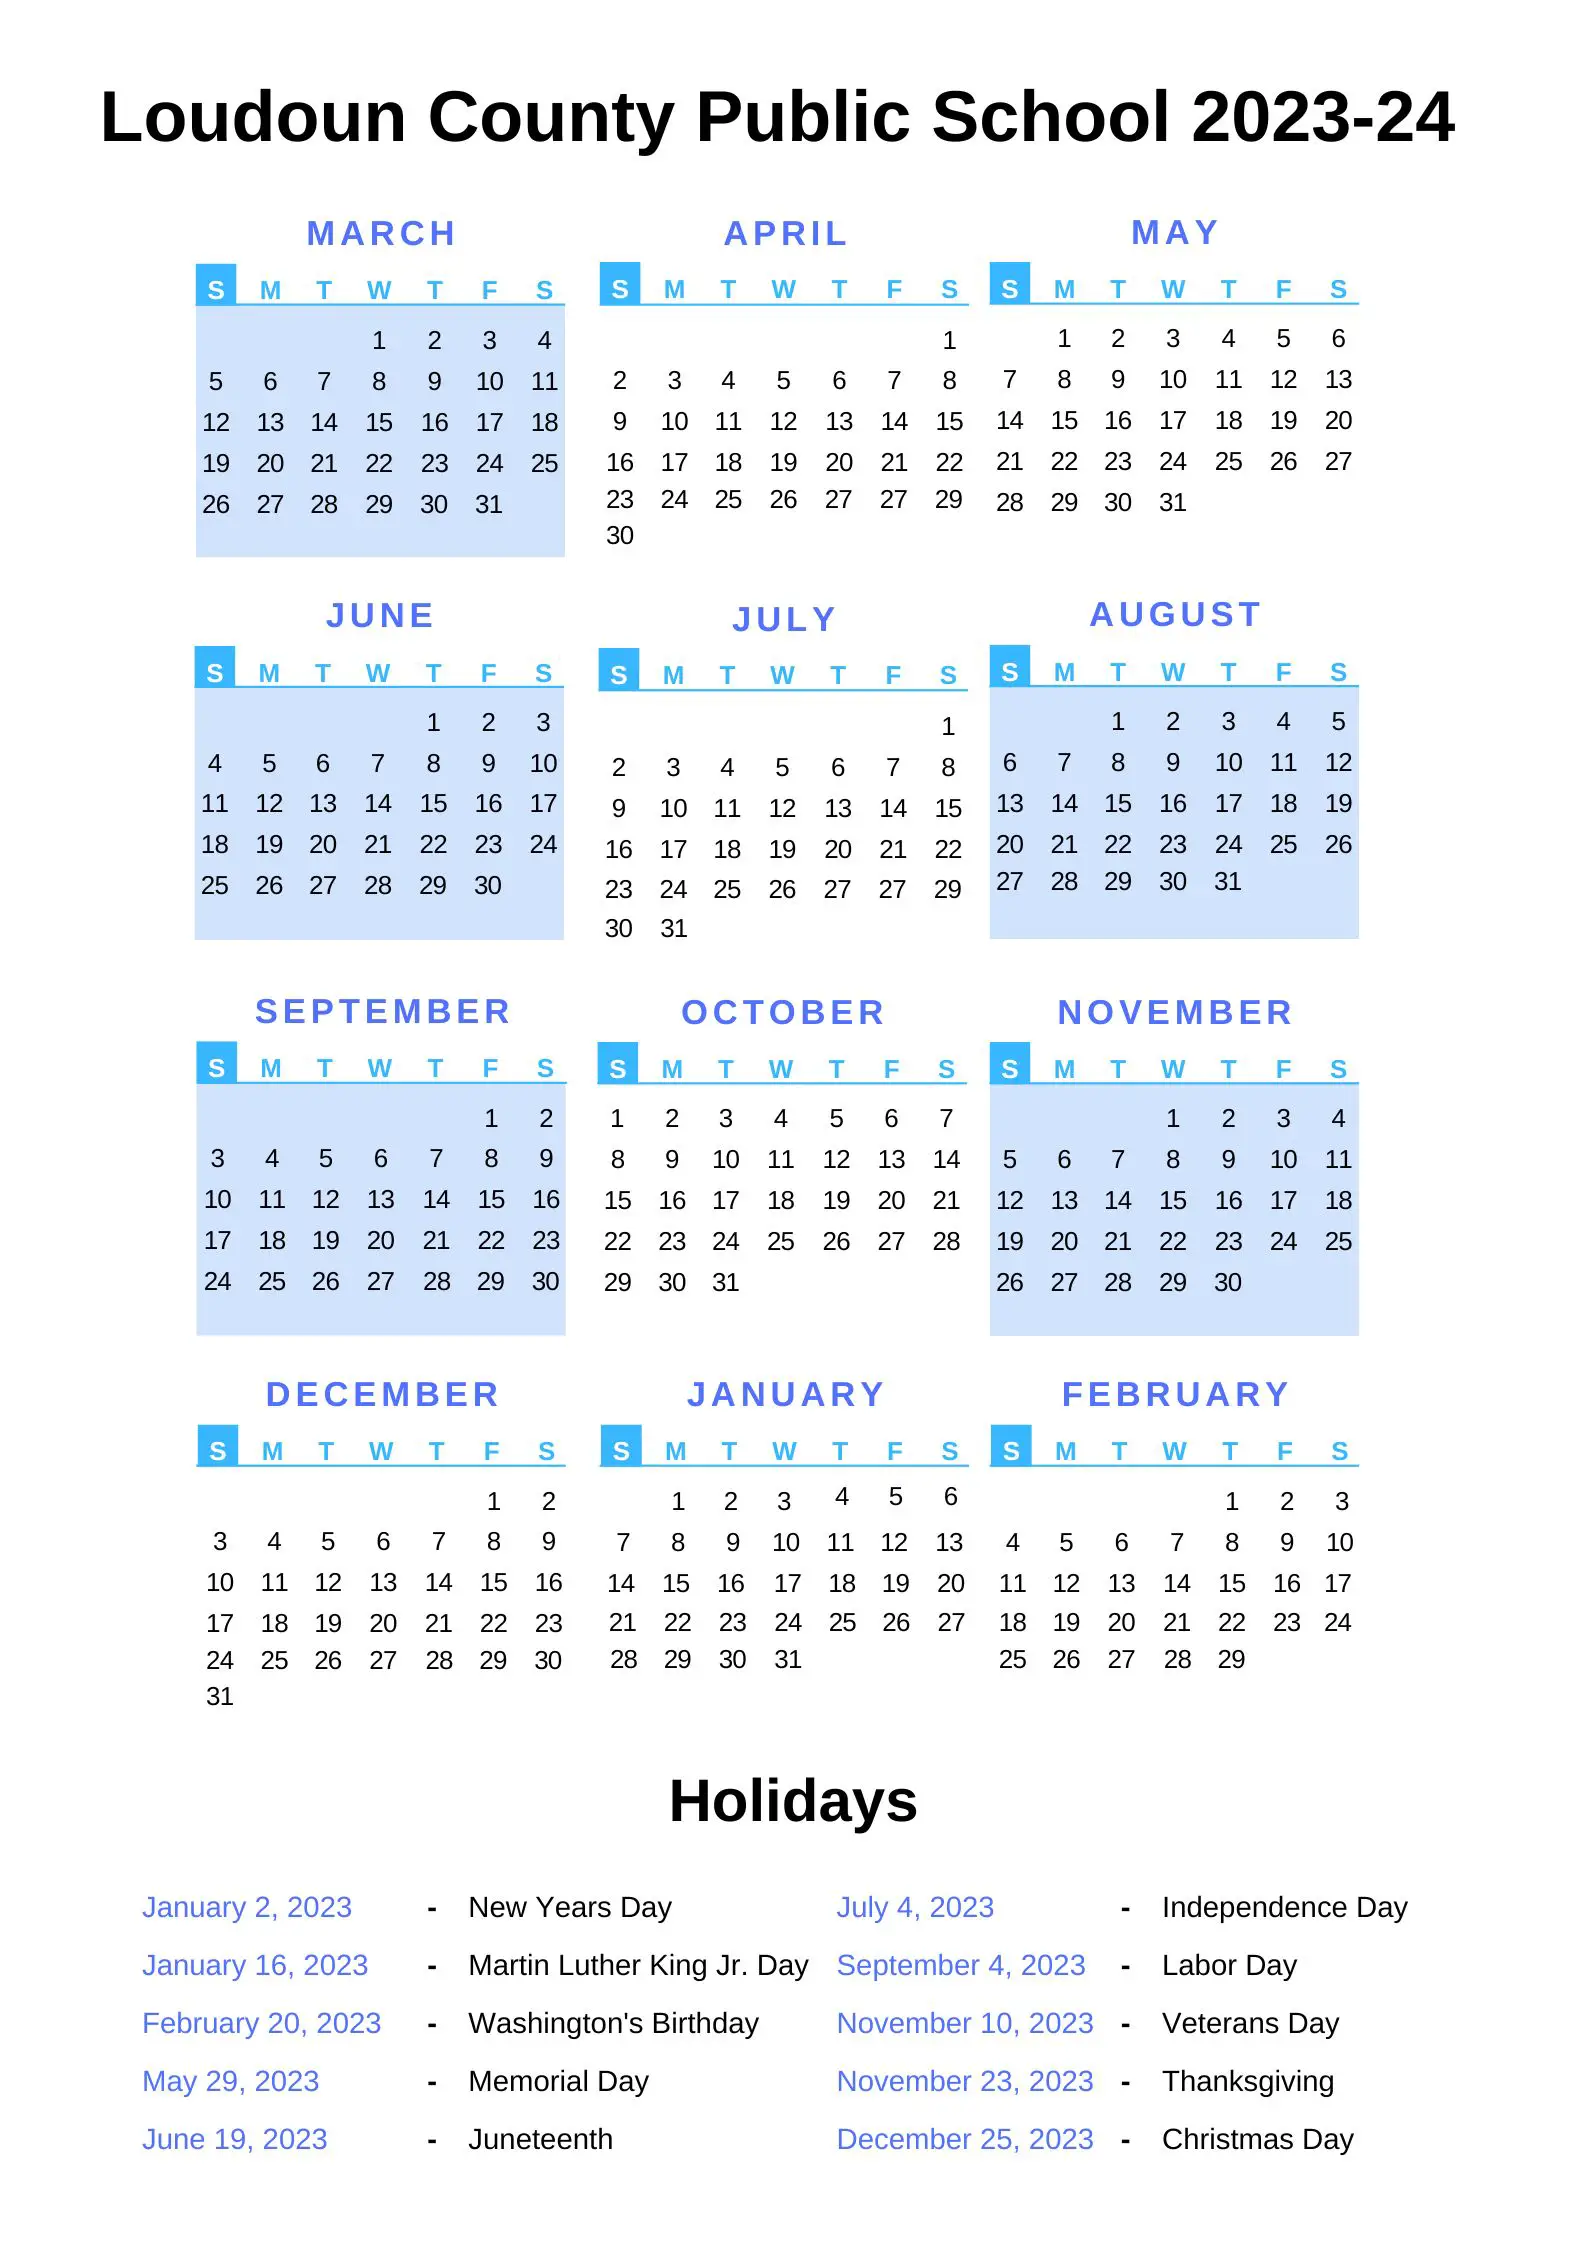 loudoun-county-public-schools-calendar-holidays-2023-2024-school